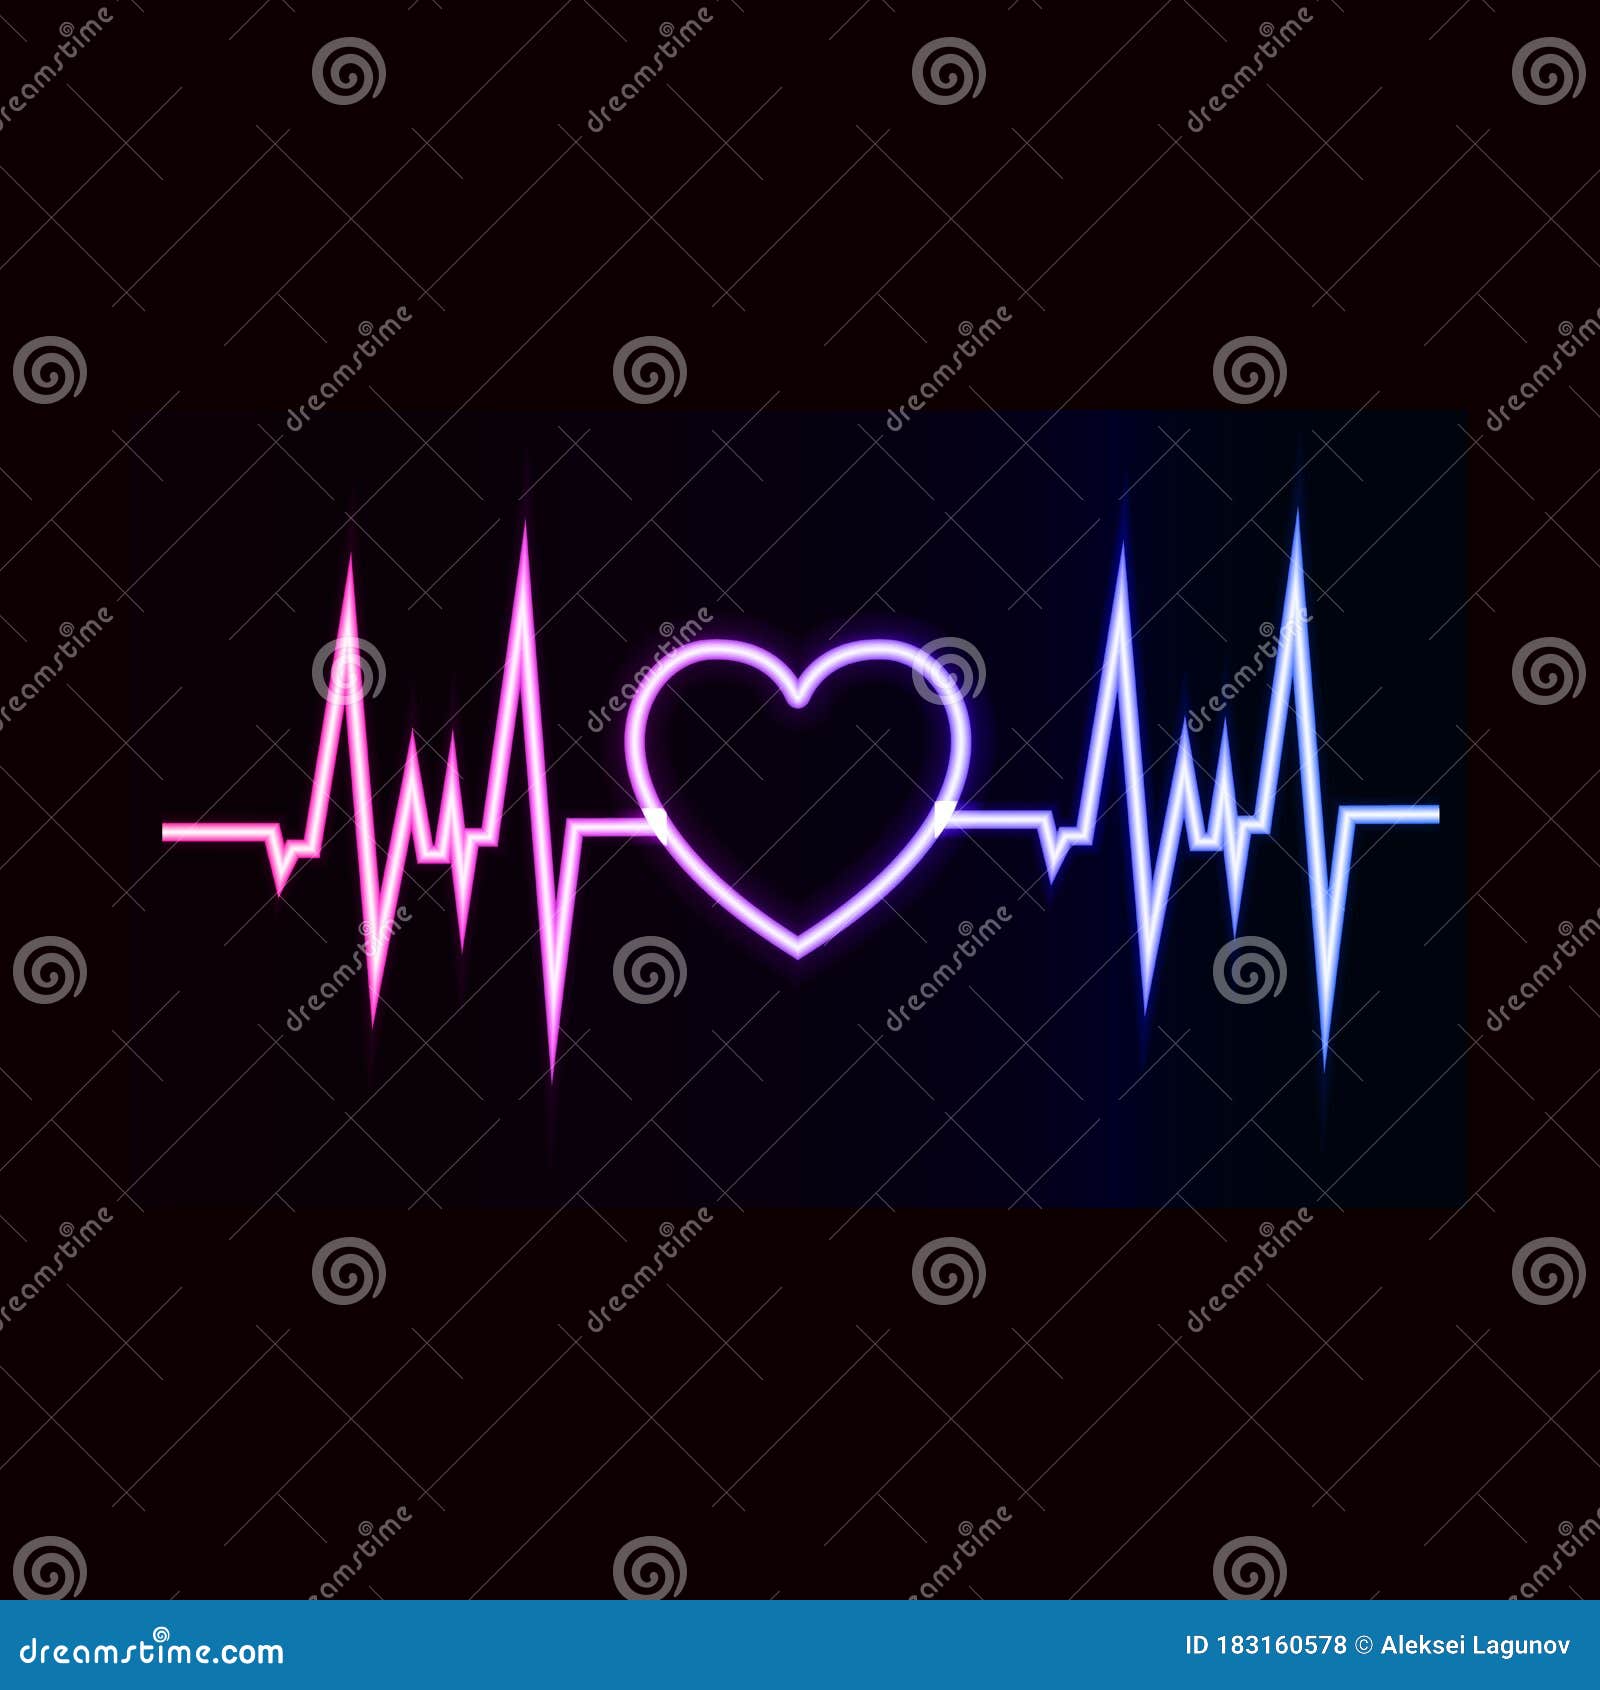 Cat Heartbeat Svg, Ekg, Cardiogram, Pulse. Vector Cut File for Cricut,  Silhouette, Pdf Png Eps Dxf, Decal, Sticker, Vinyl, Pin, Stencil - Etsy